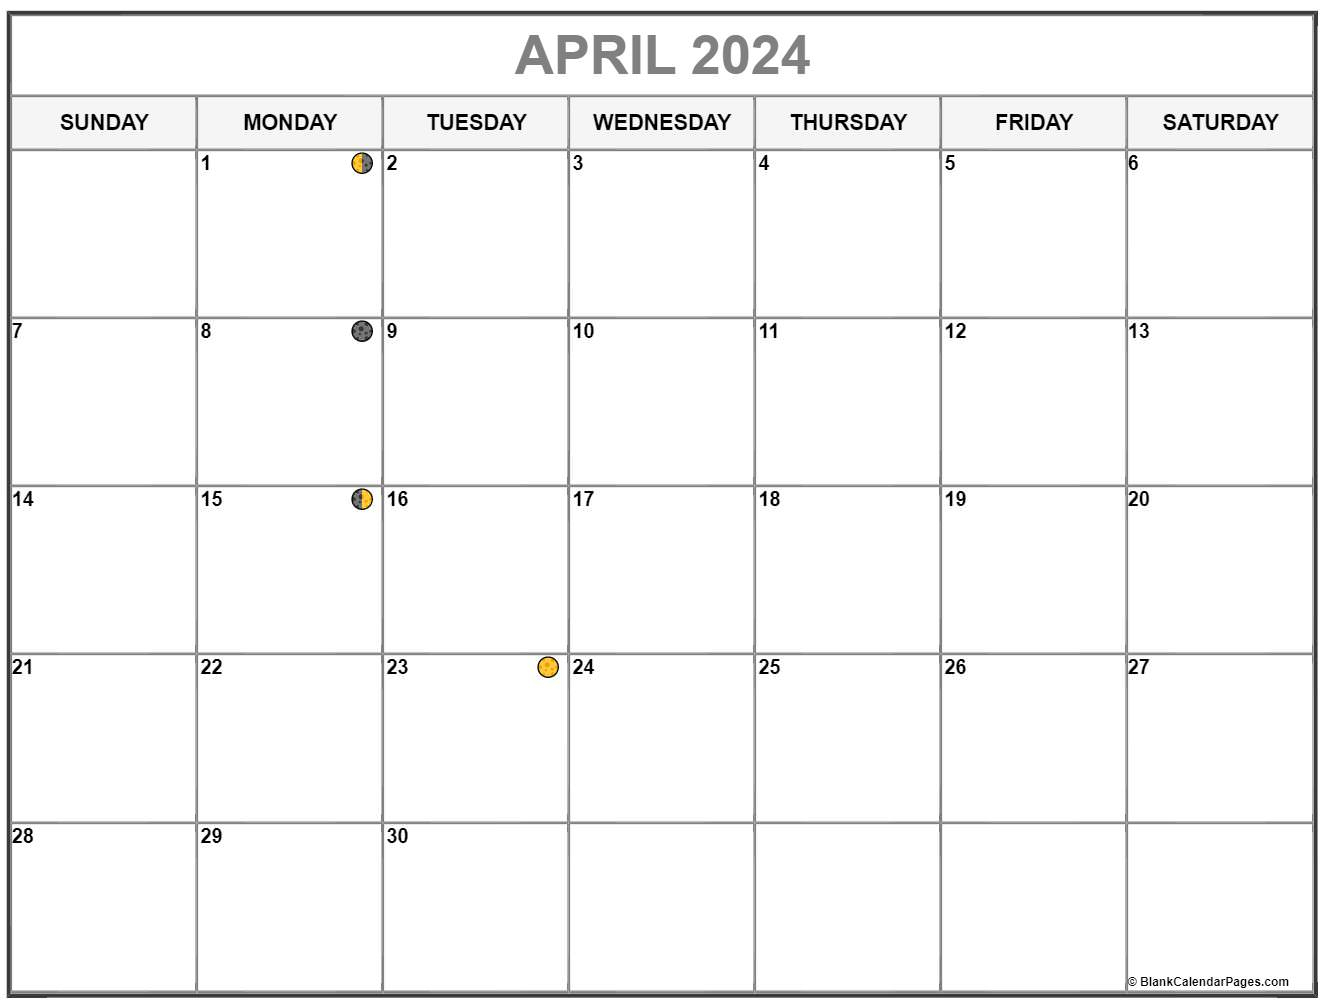 April 2024 Lunar Calendar | Moon Phase Calendar with Moon Calendar April 2024